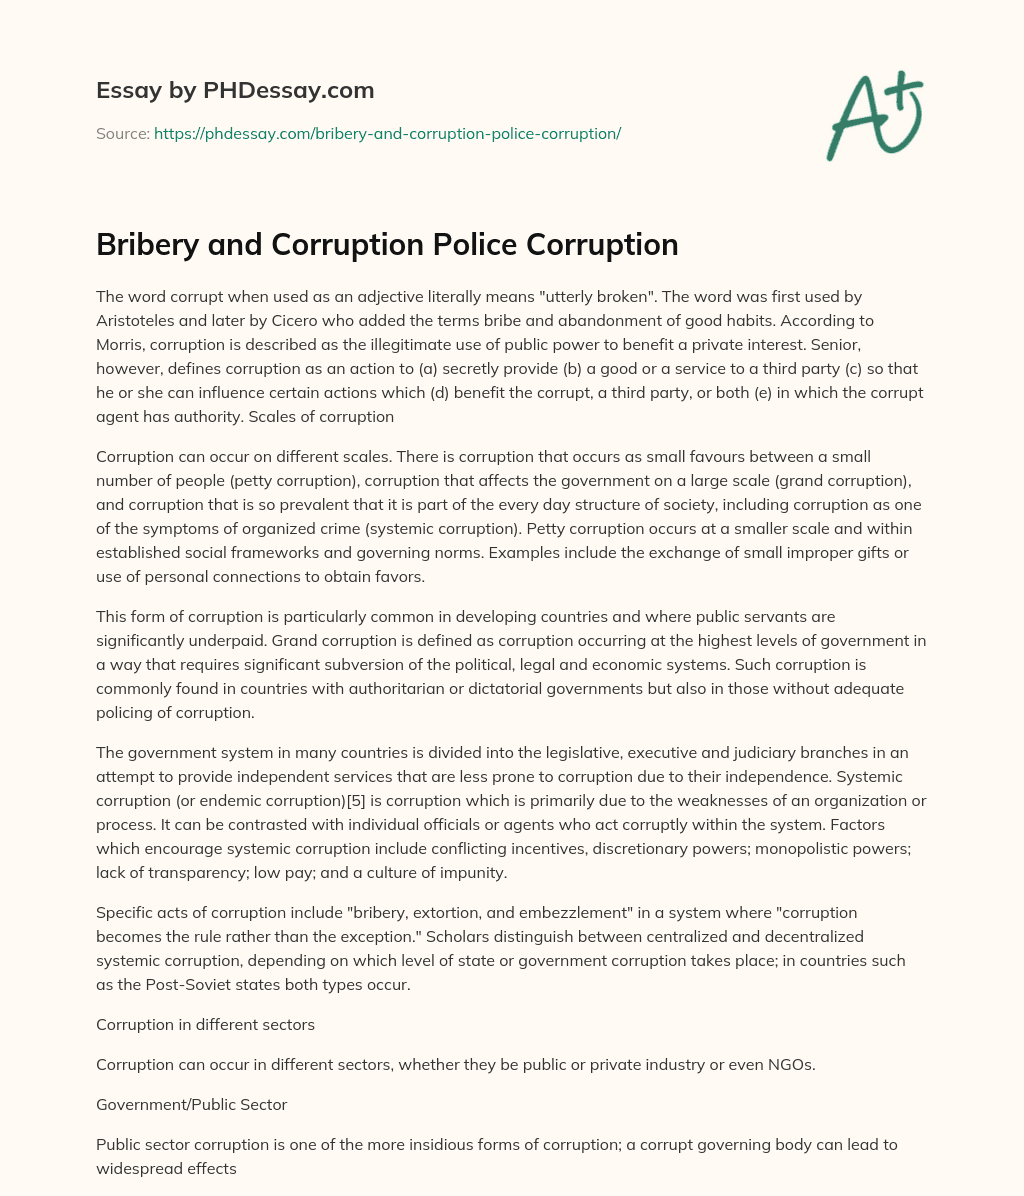 Bribery and Corruption Police Corruption essay